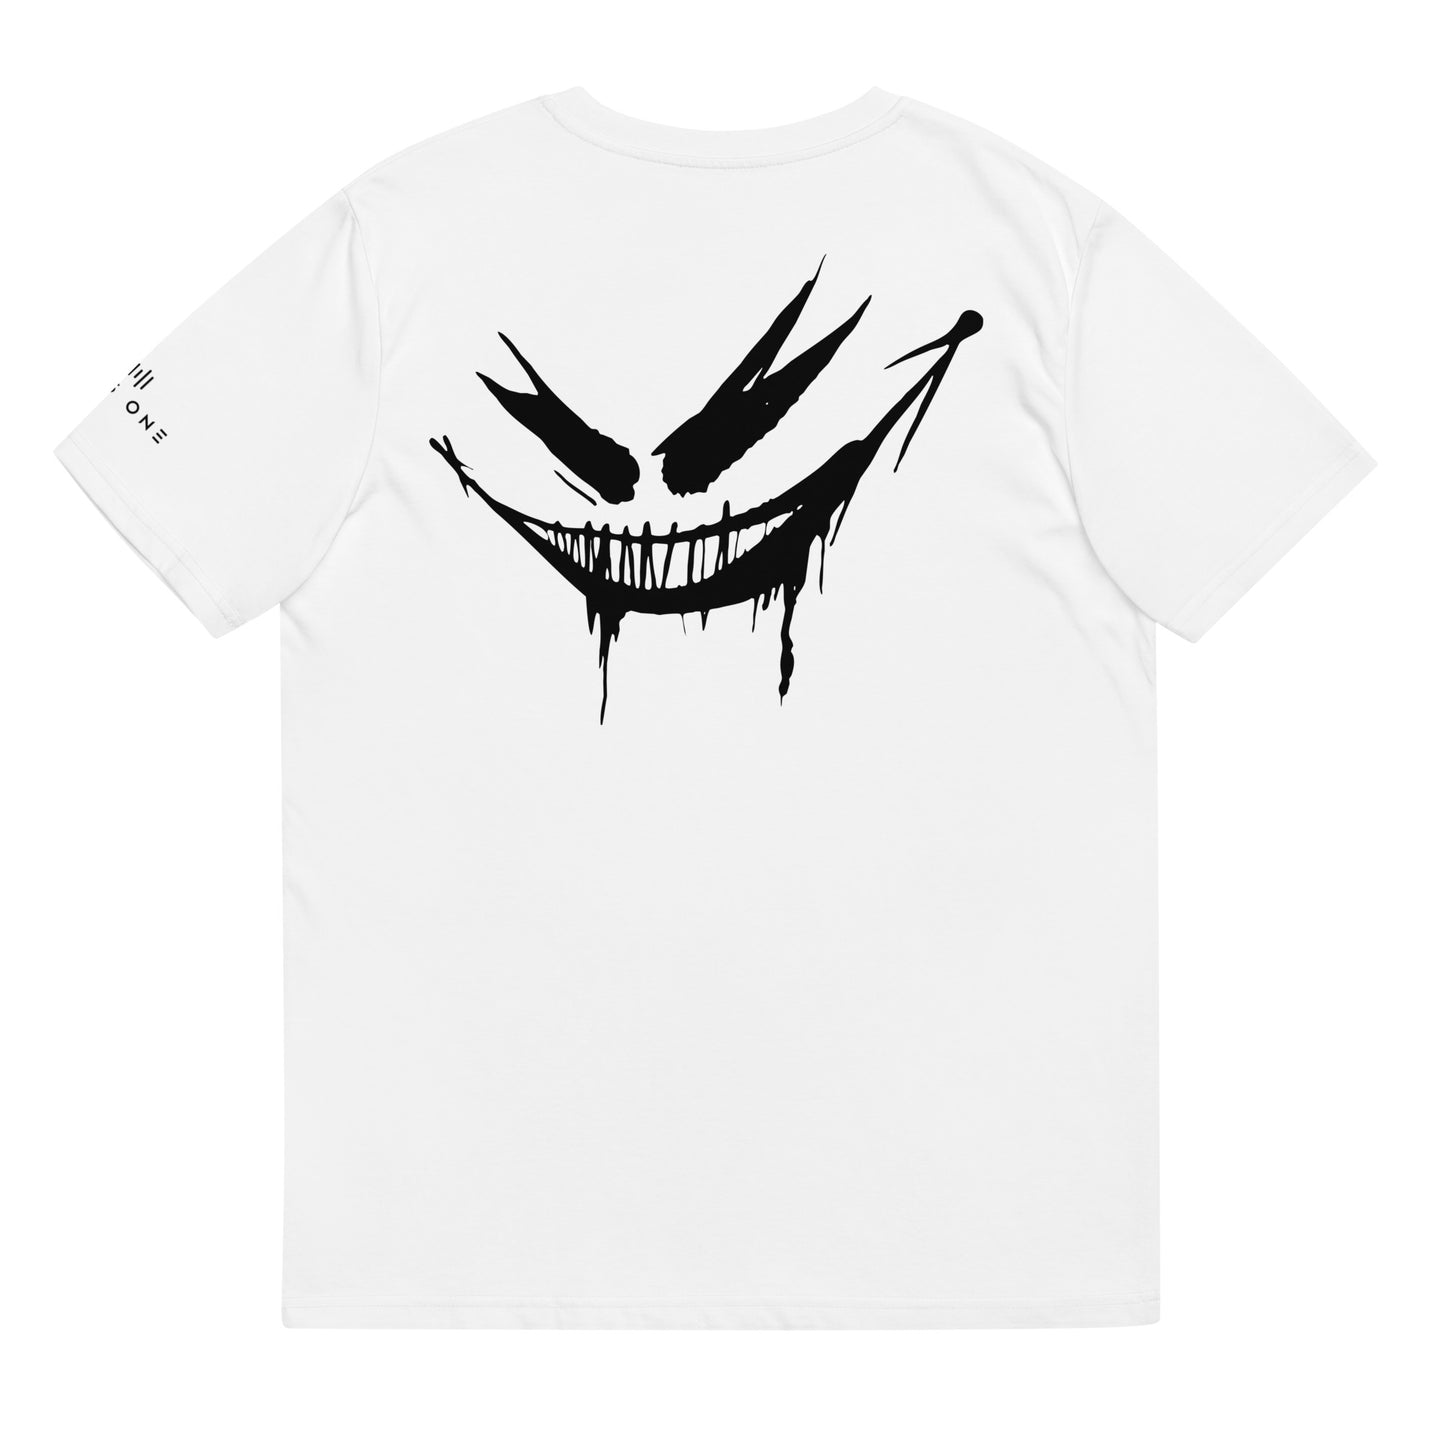 Tribe (The Beast v1) Unisex organic cotton t-shirt (Black Text)